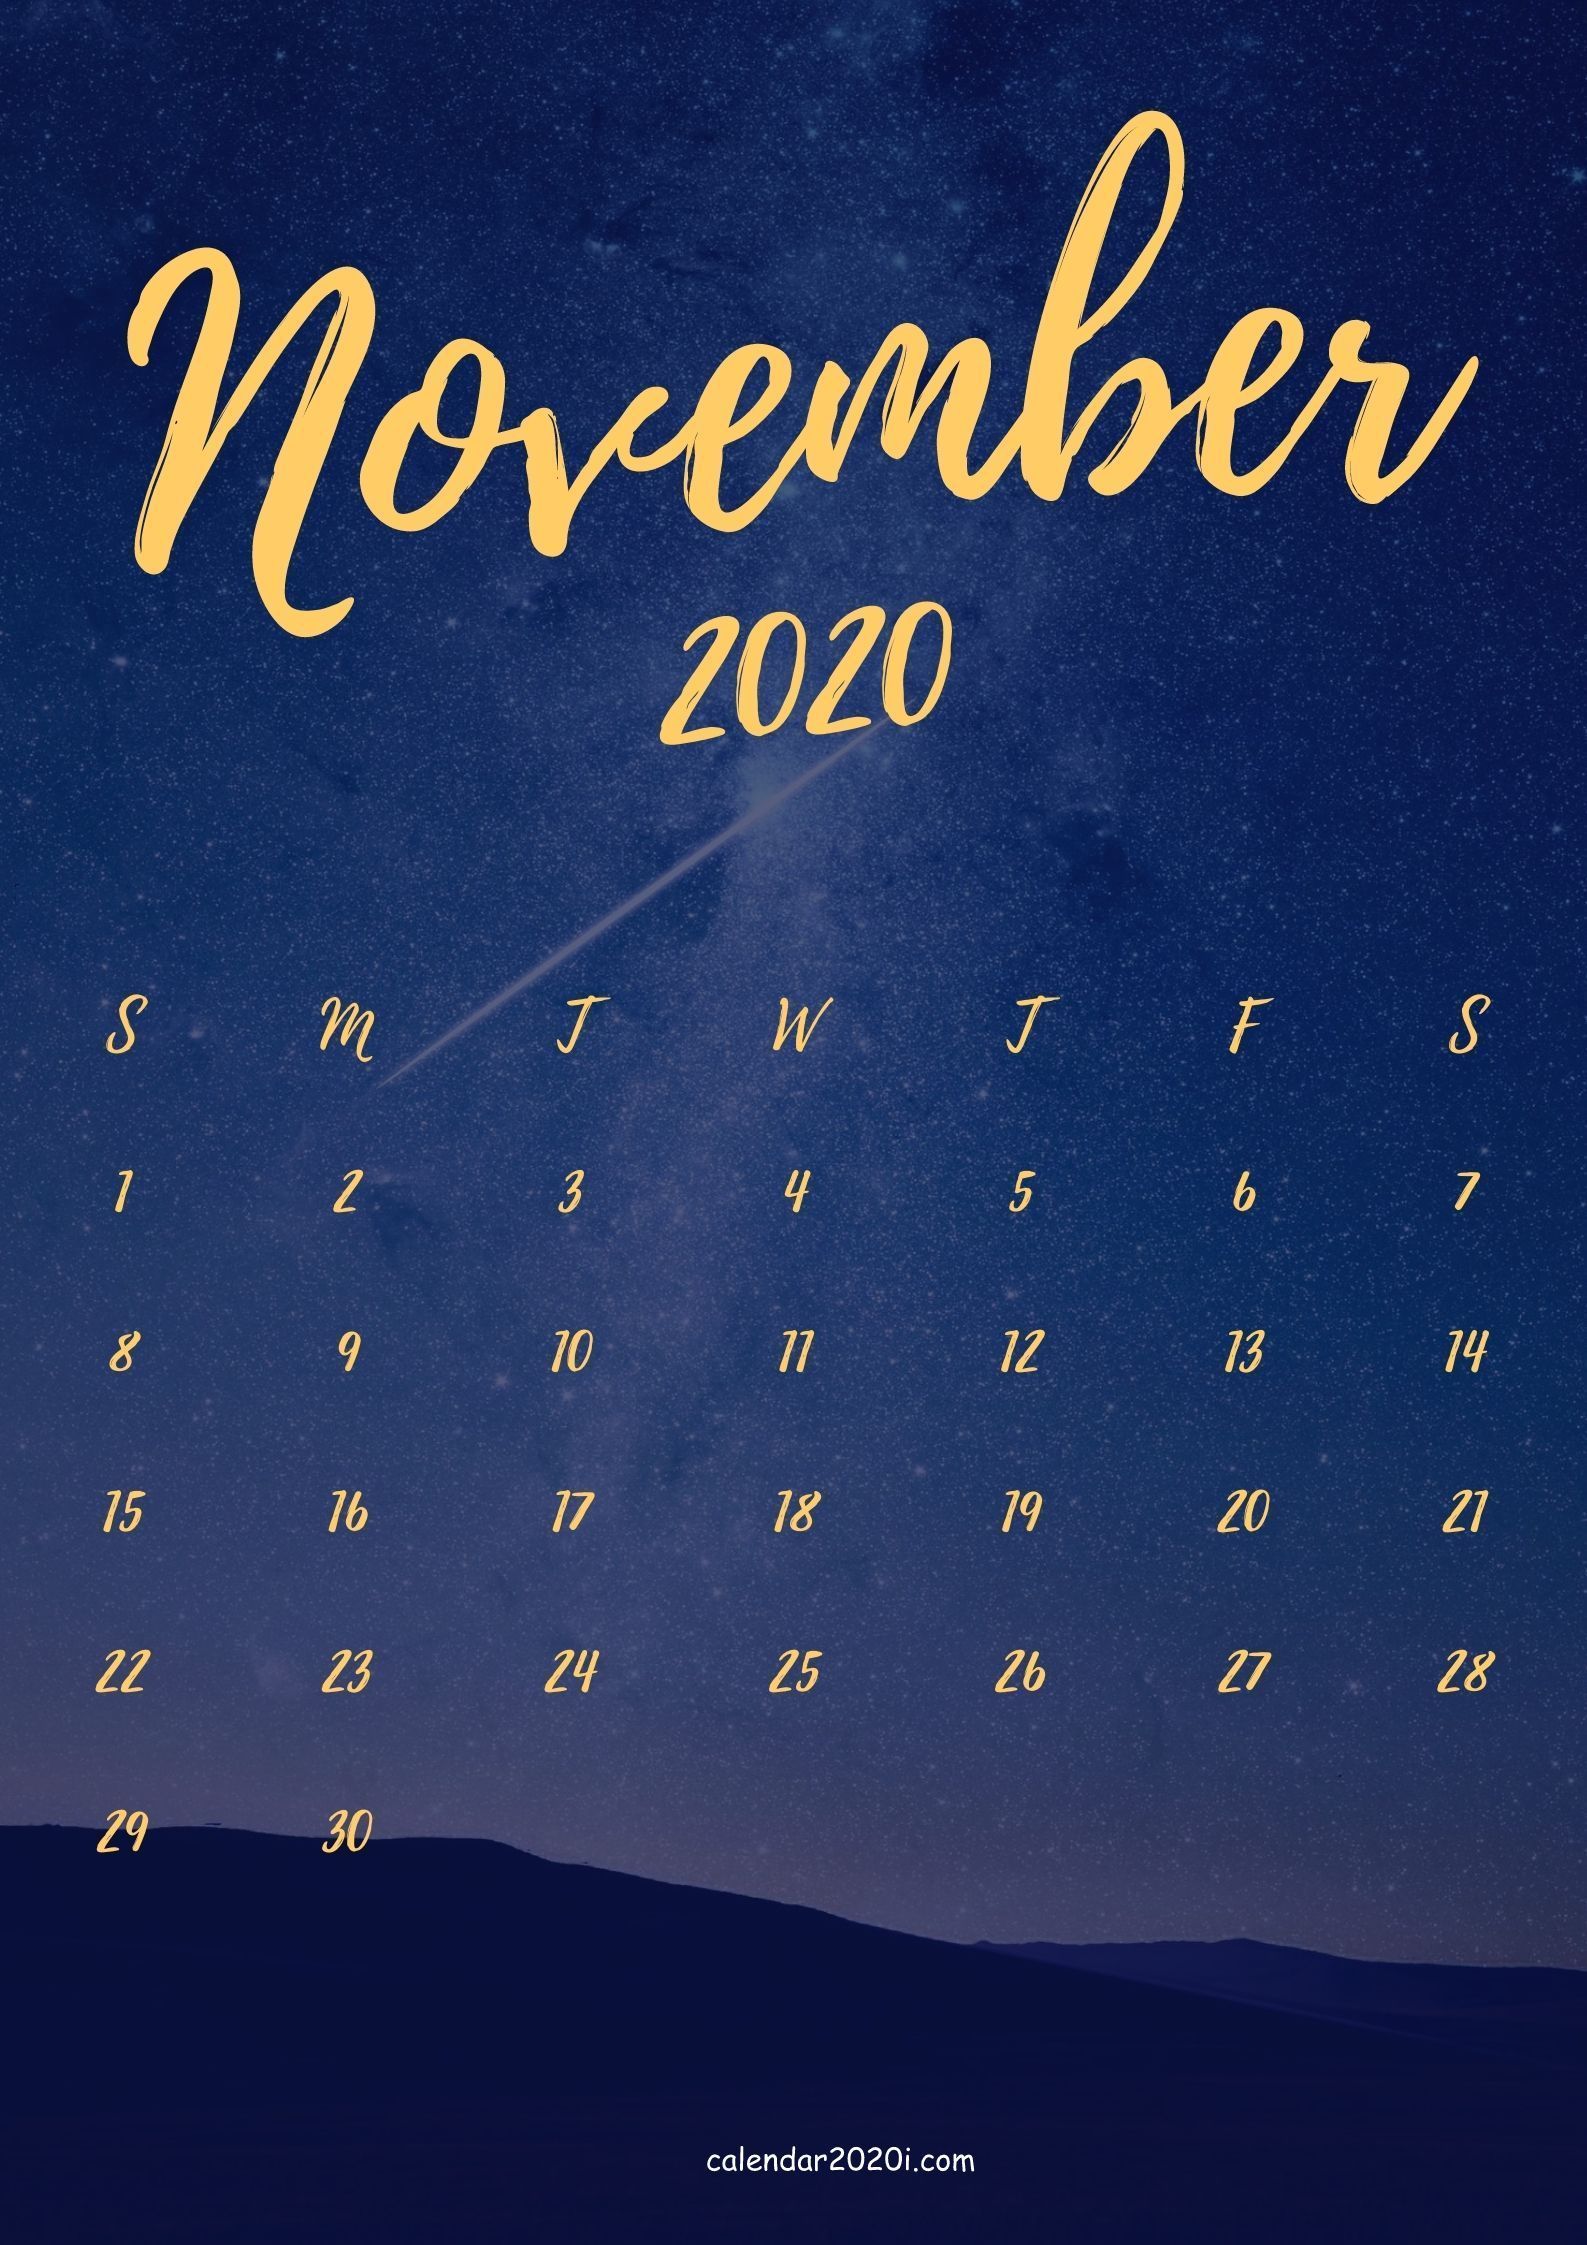 Free November 2020 iPhone calendar wallpaper in HD for mobile screen background. Calendar wallpaper, Desktop calendar, Calendar